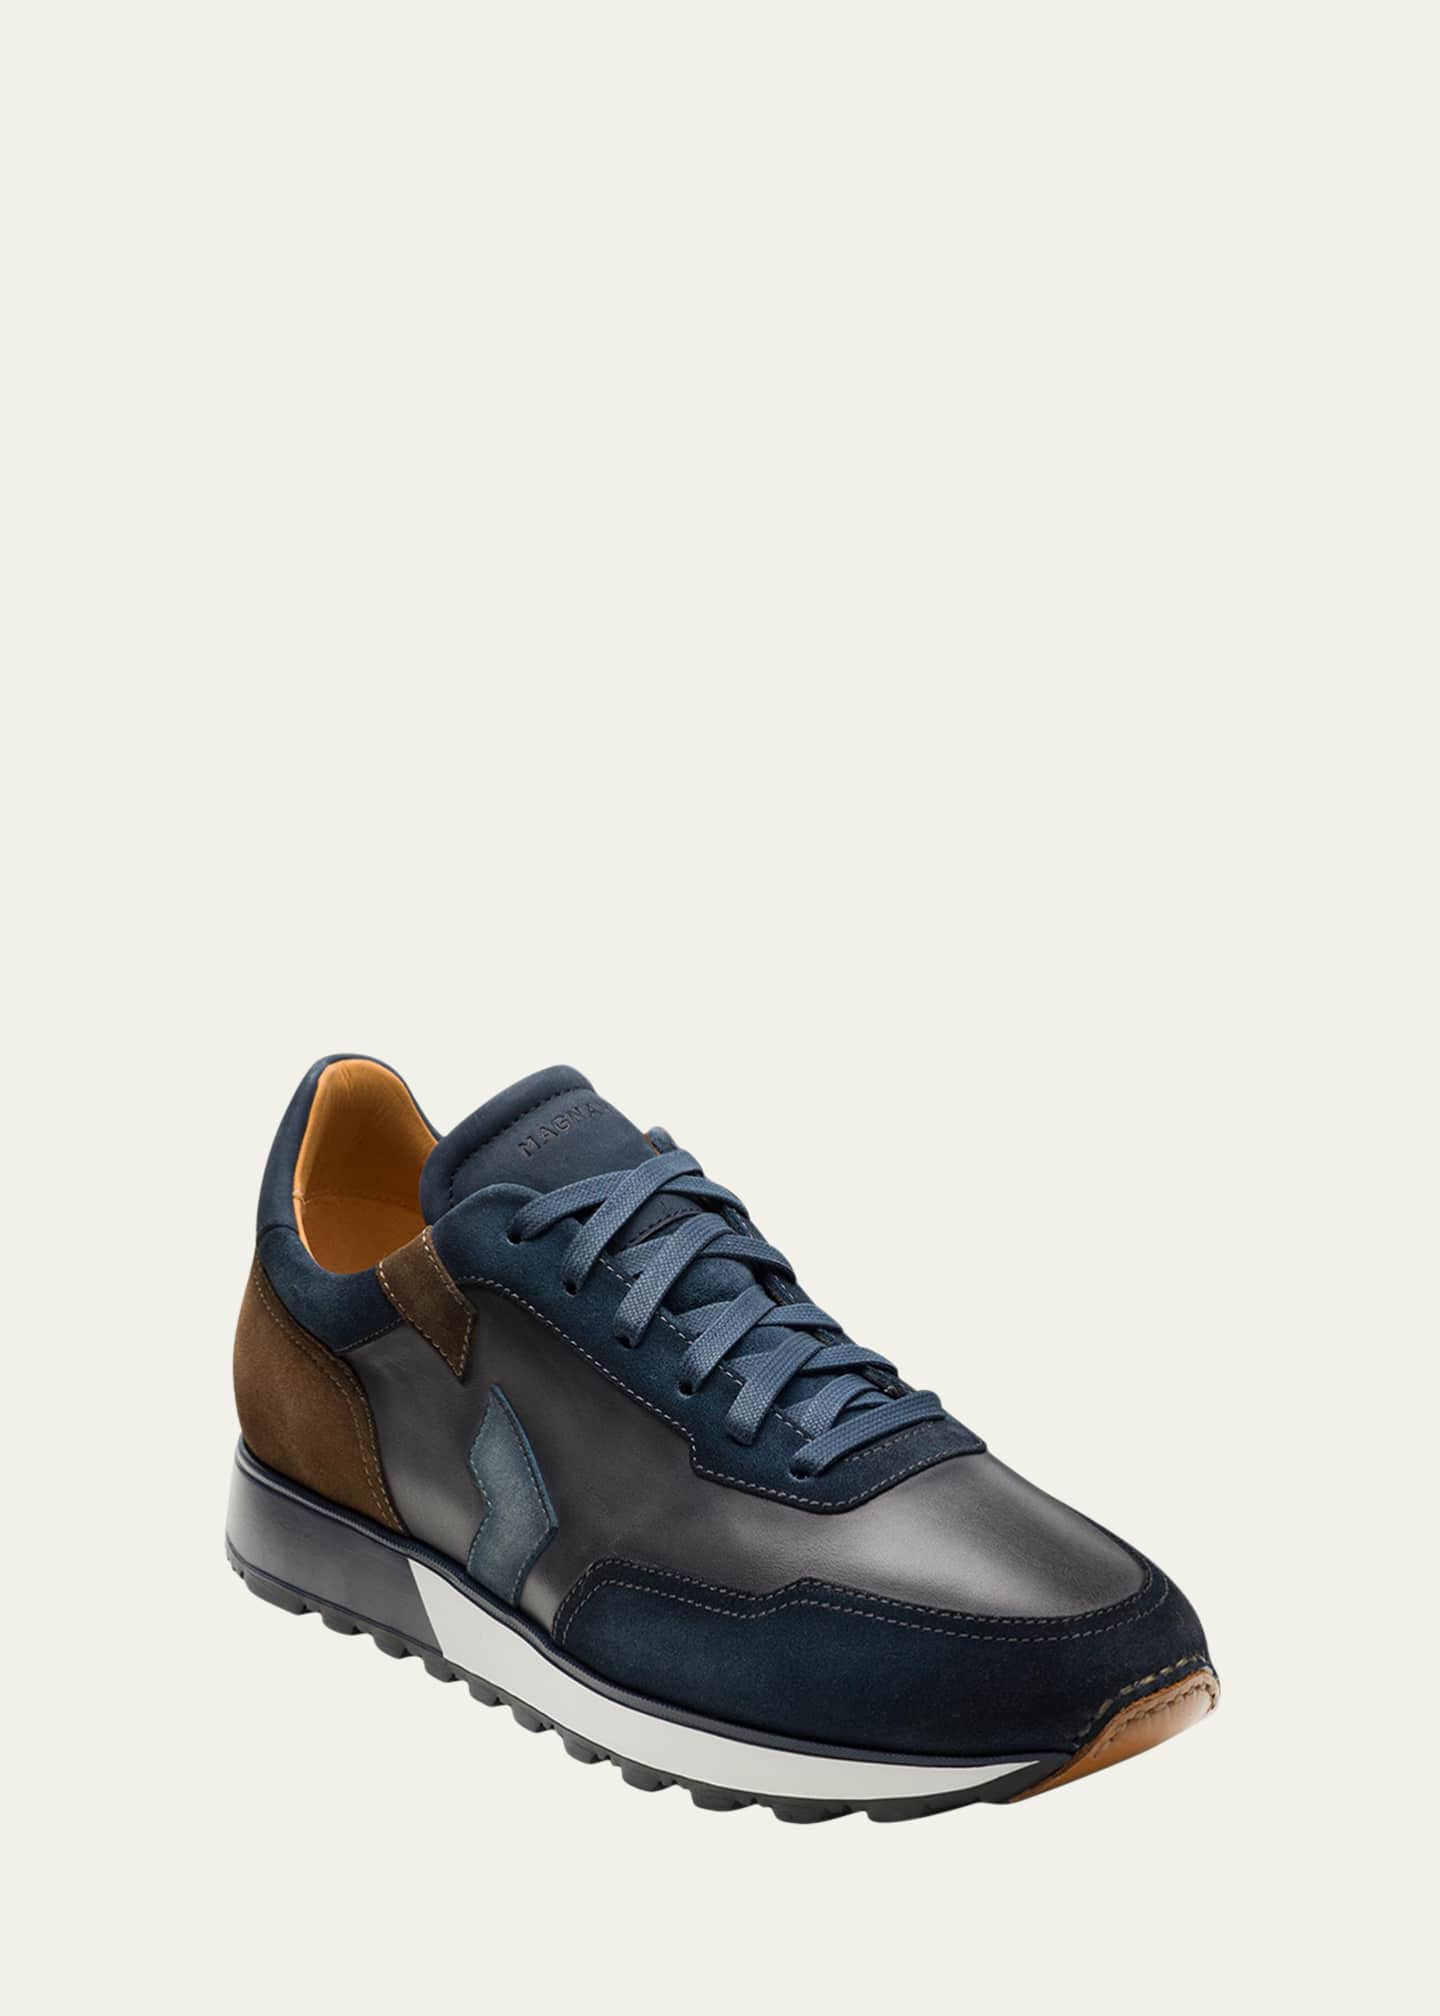 Magnanni Men's Leather Aero Runner Sneakers - Bergdorf Goodman